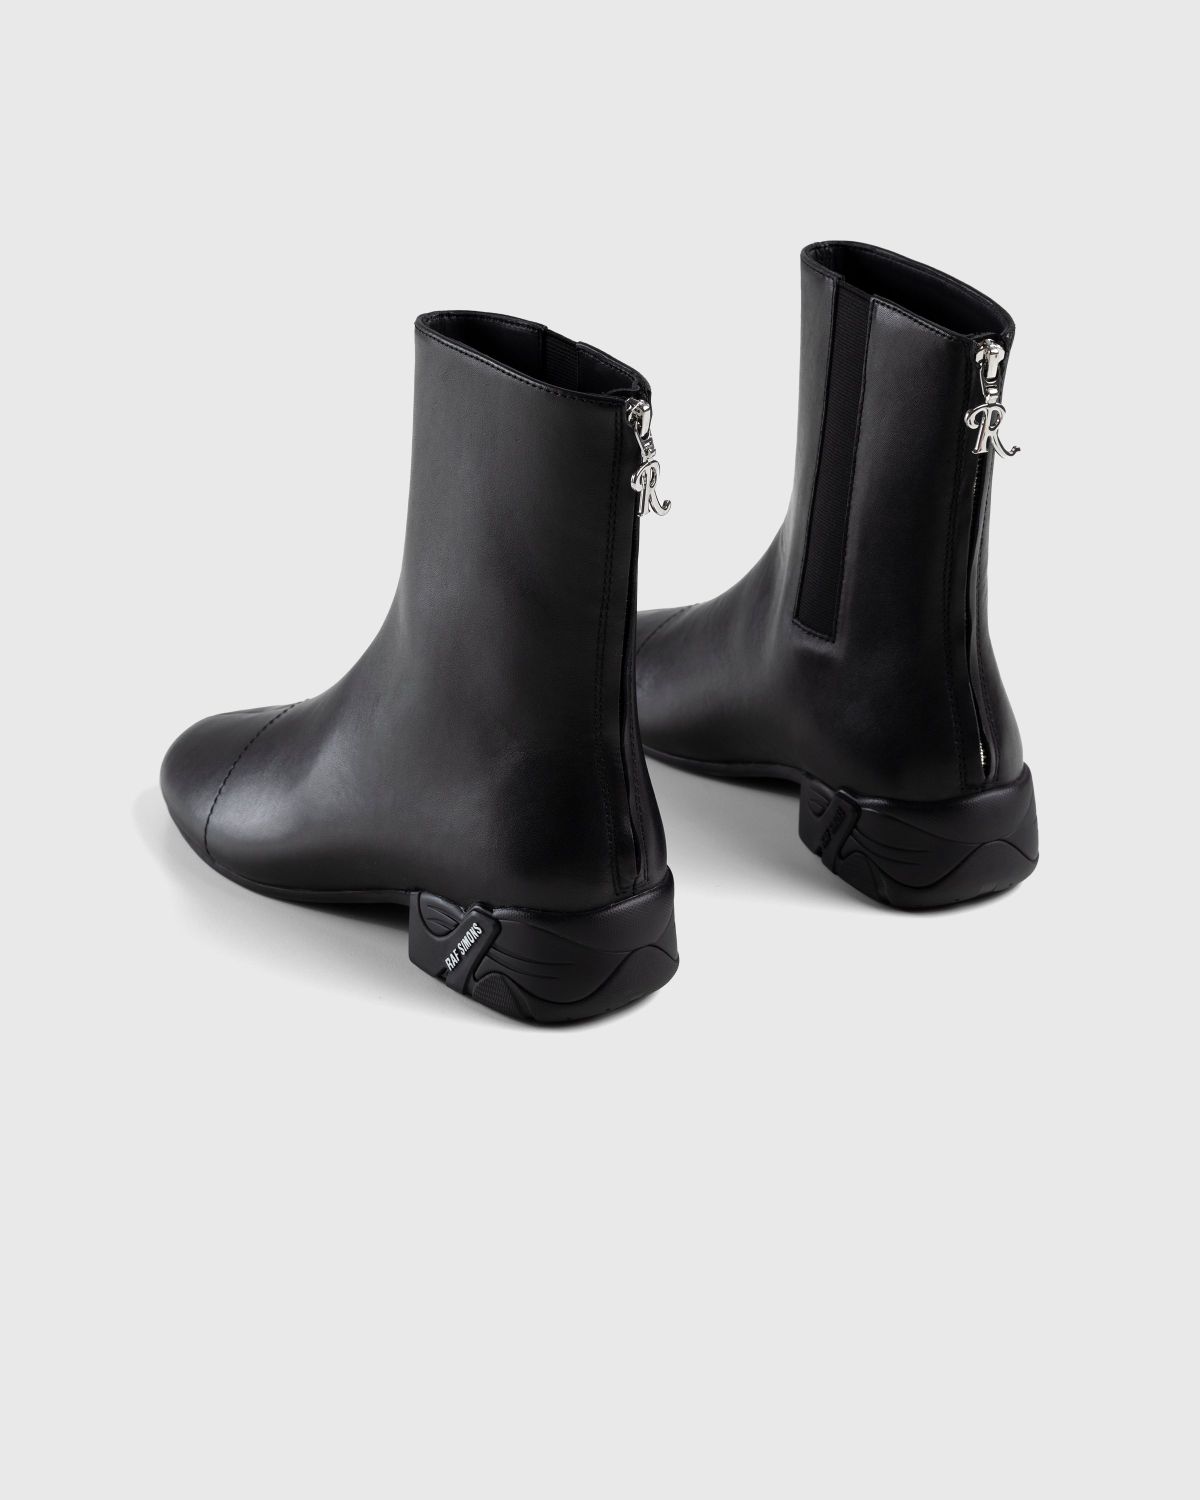 Raf Simons – Solaris High Leather Boot Black | Highsnobiety Shop